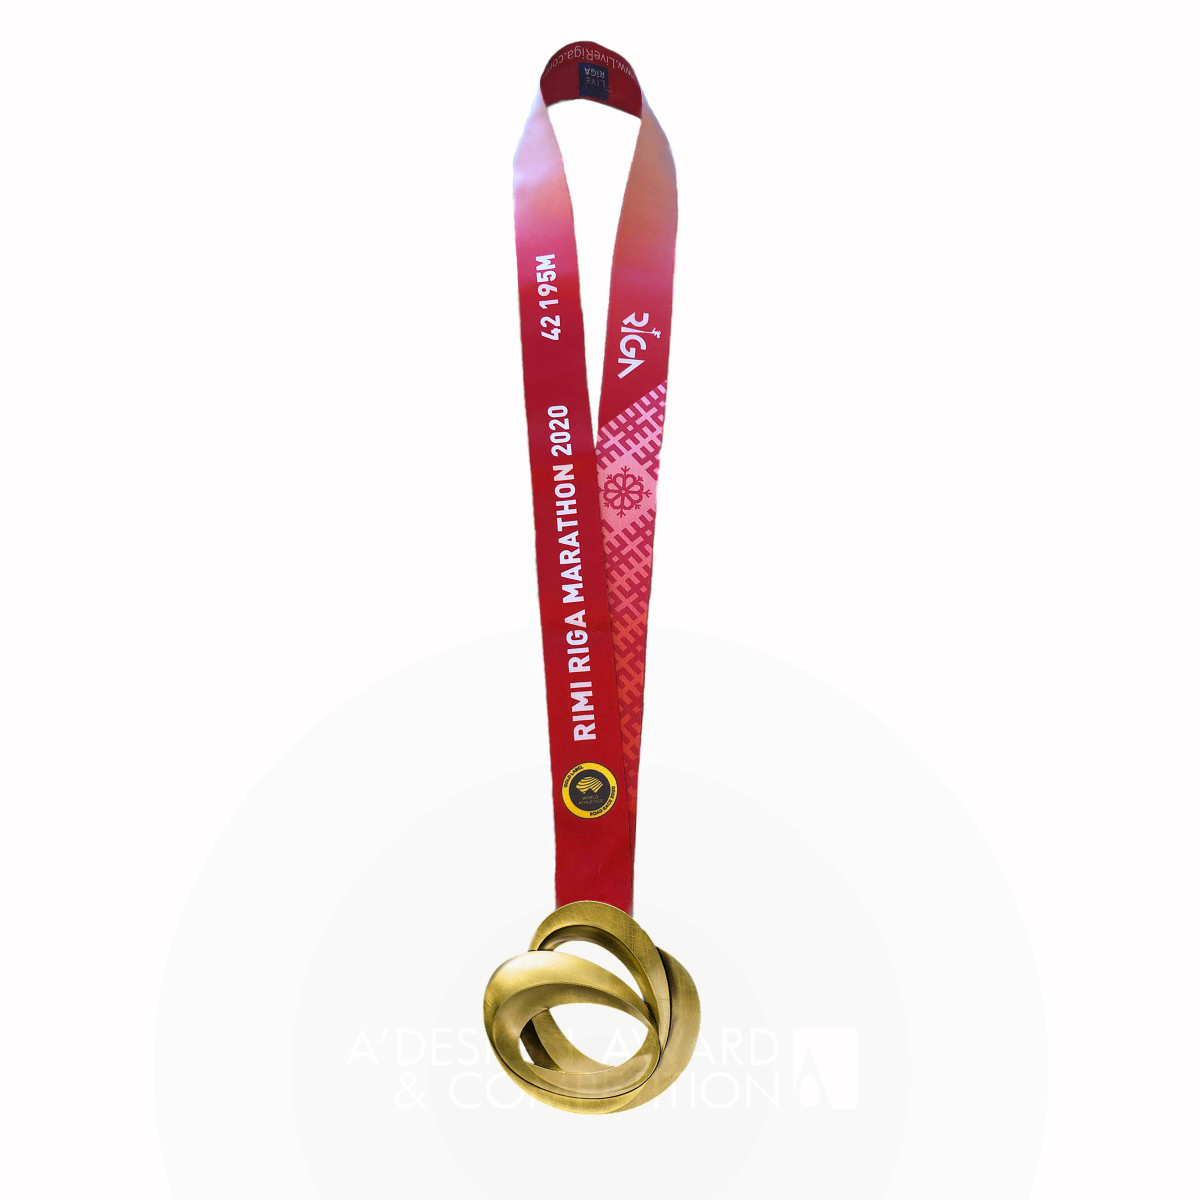 Riga marathon 2020 Runner's Medals by Junichi Kawanishi